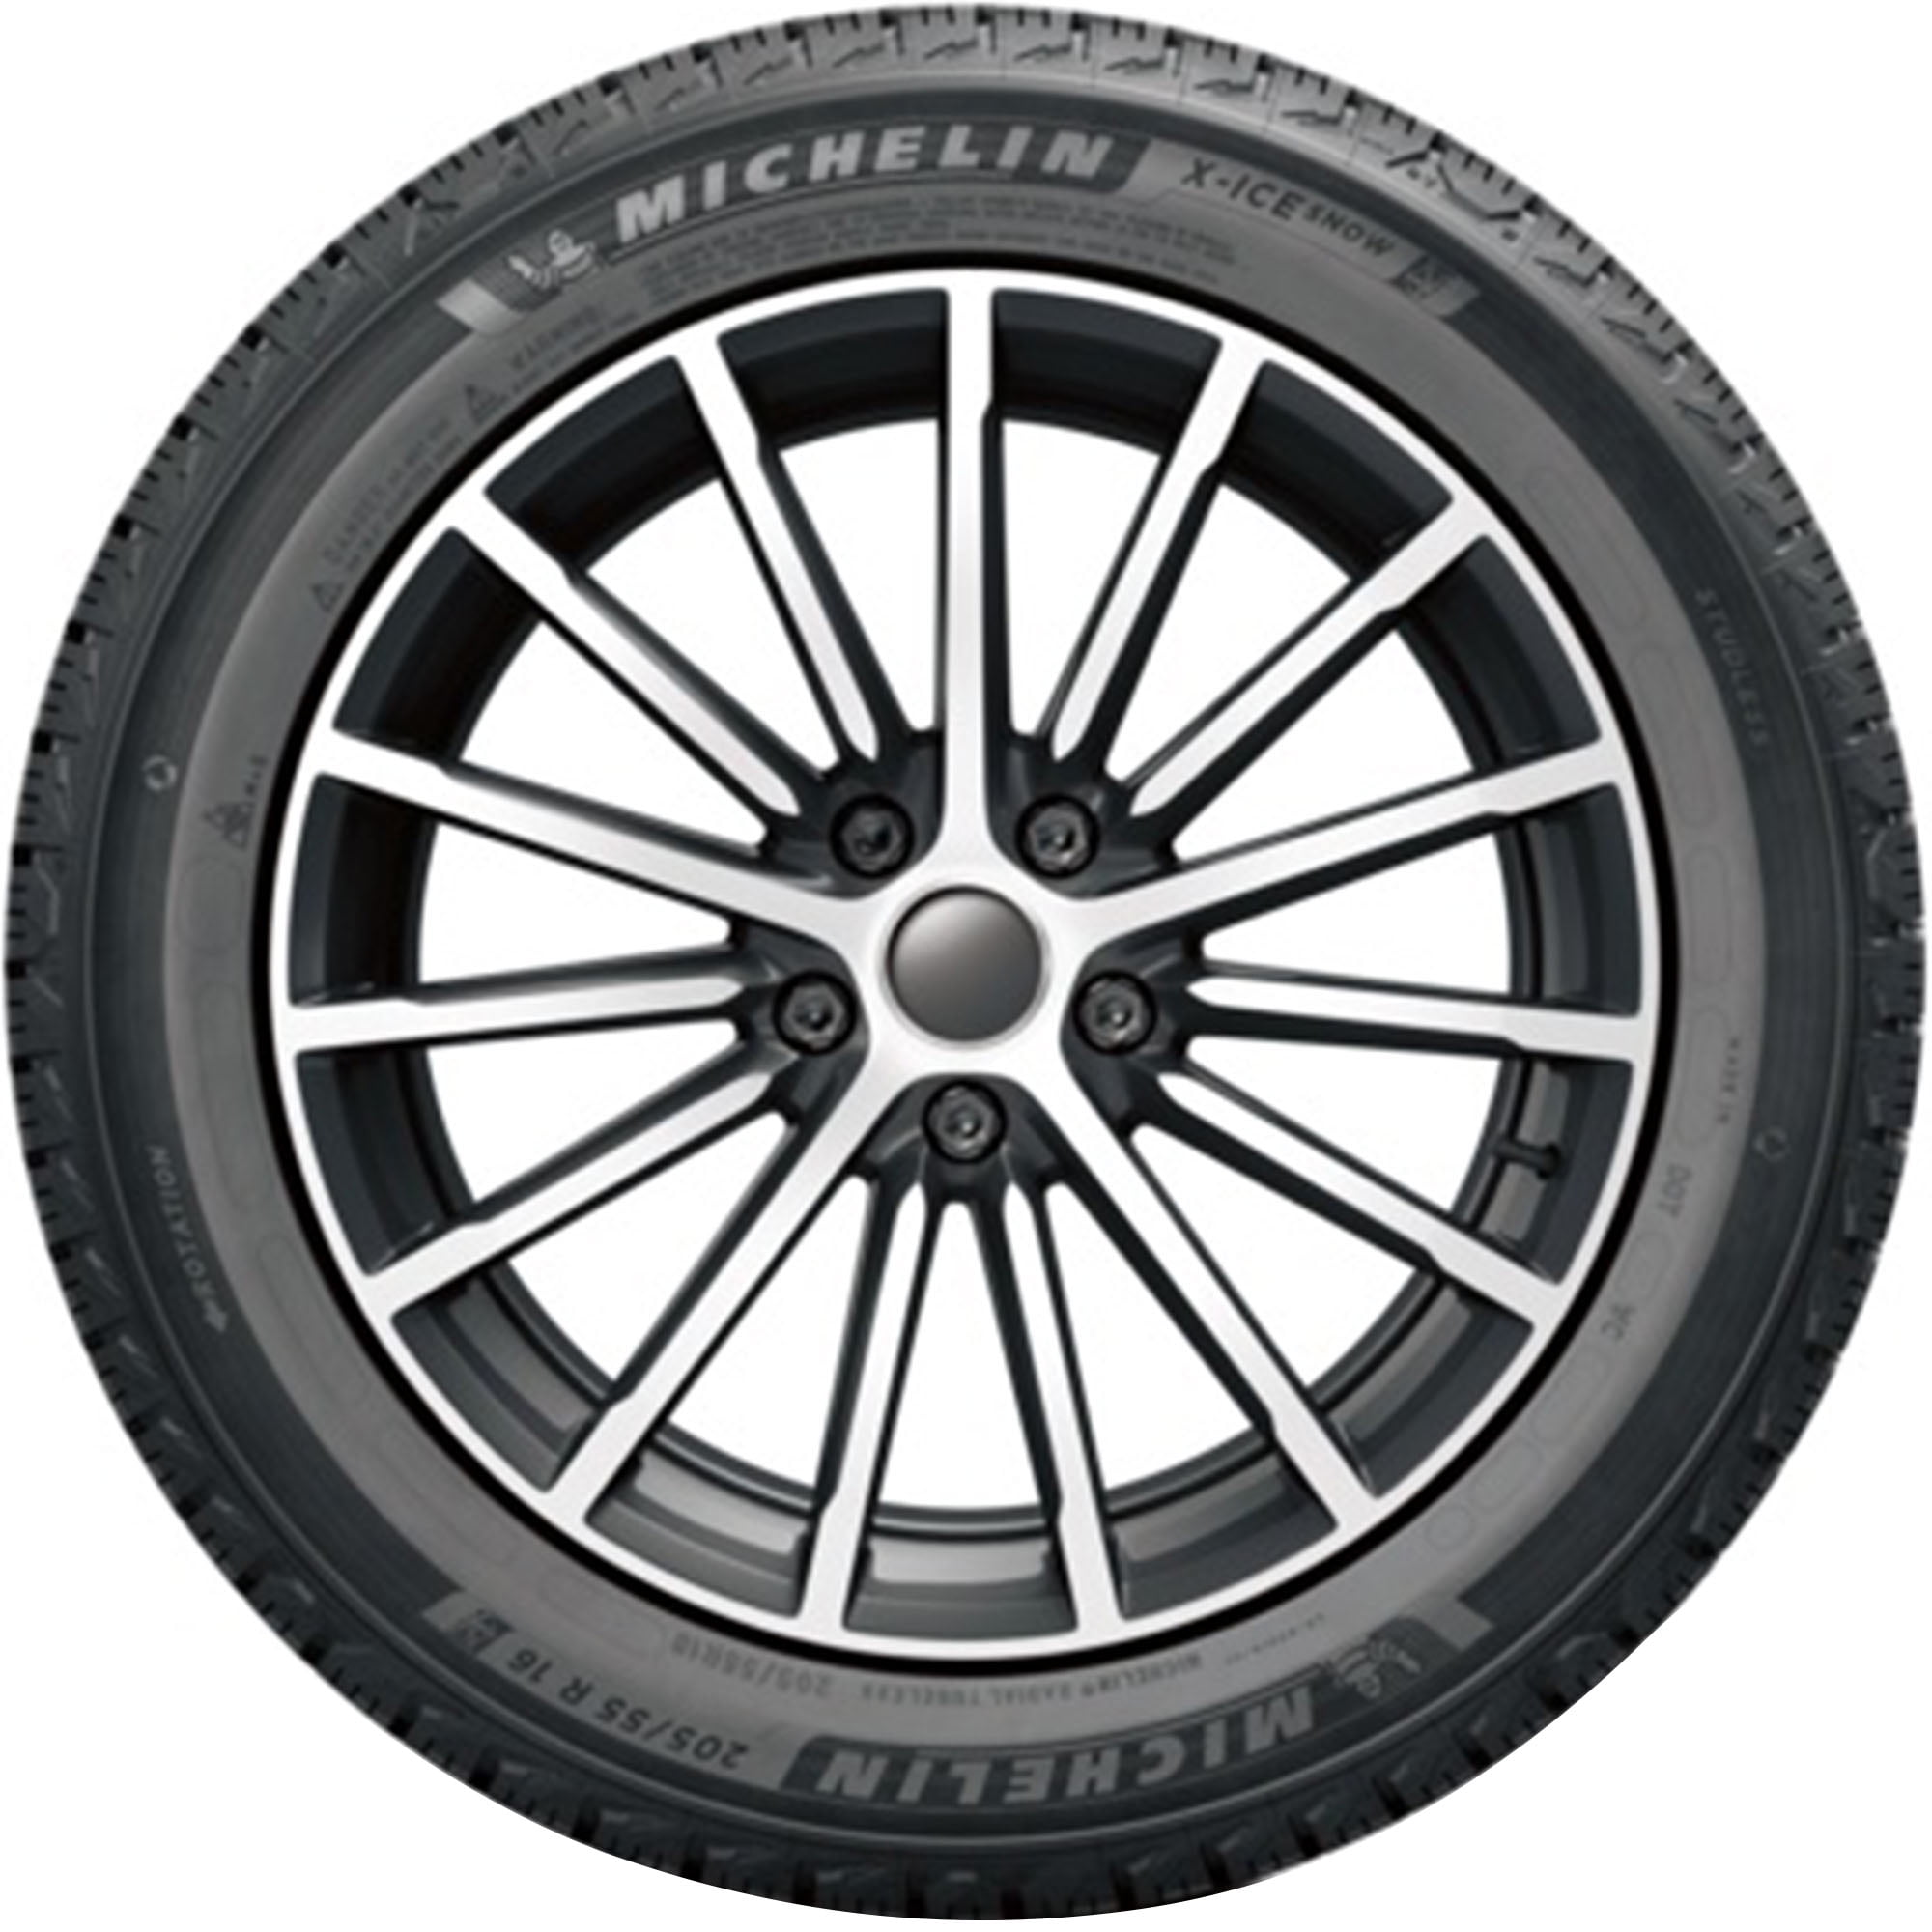 Passenger XL Michelin Tire Snow 205/65R16 X-Ice 99T Winter